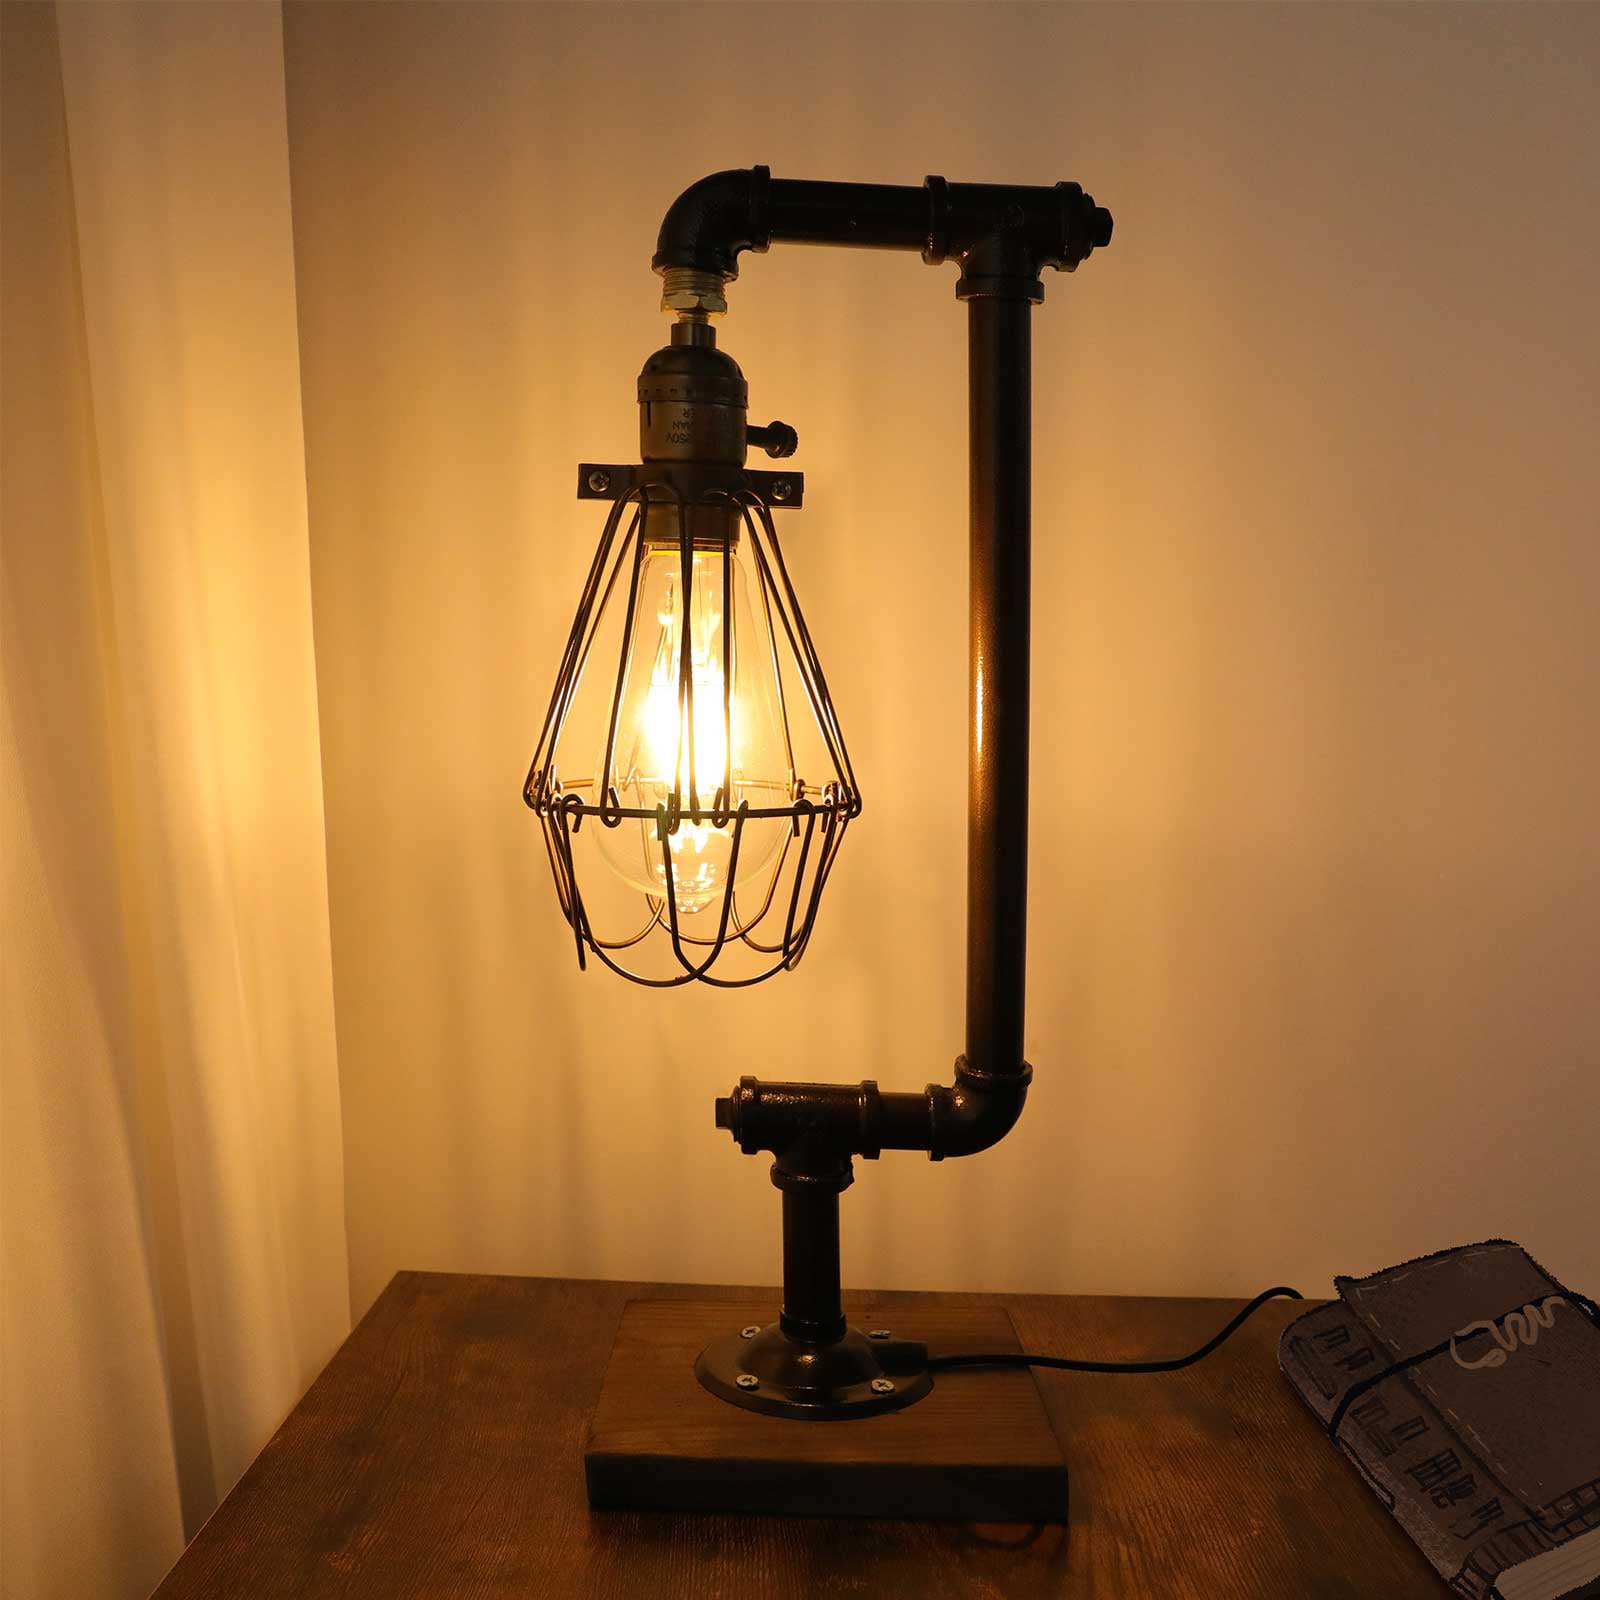 Robot Steampunk Industrial Light Black and Brass Pipe Desk Lamp Dorm Room Lamp 